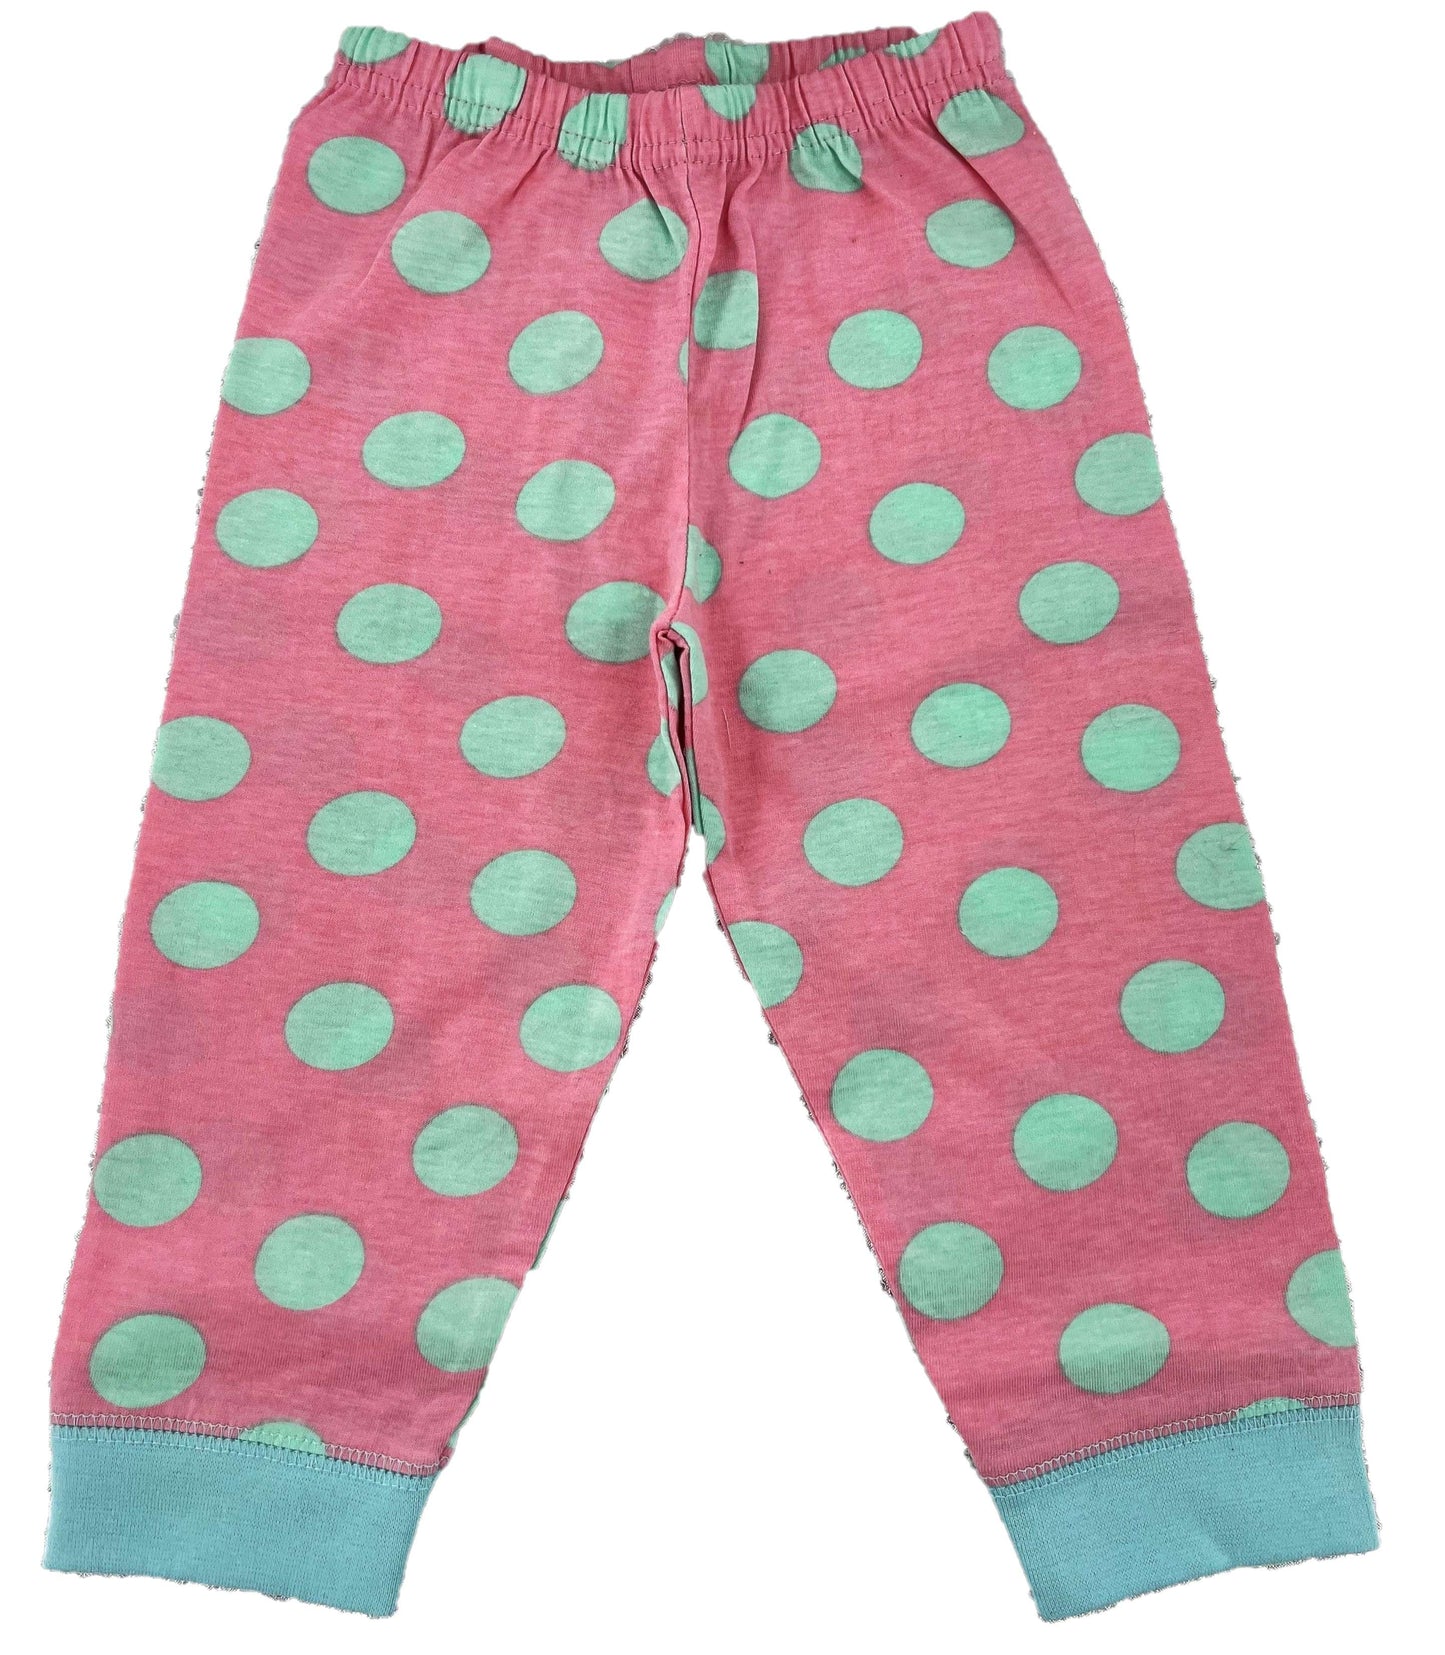 Disney Eeyore Girl's 2 Piece Pyjama Set "Dream"